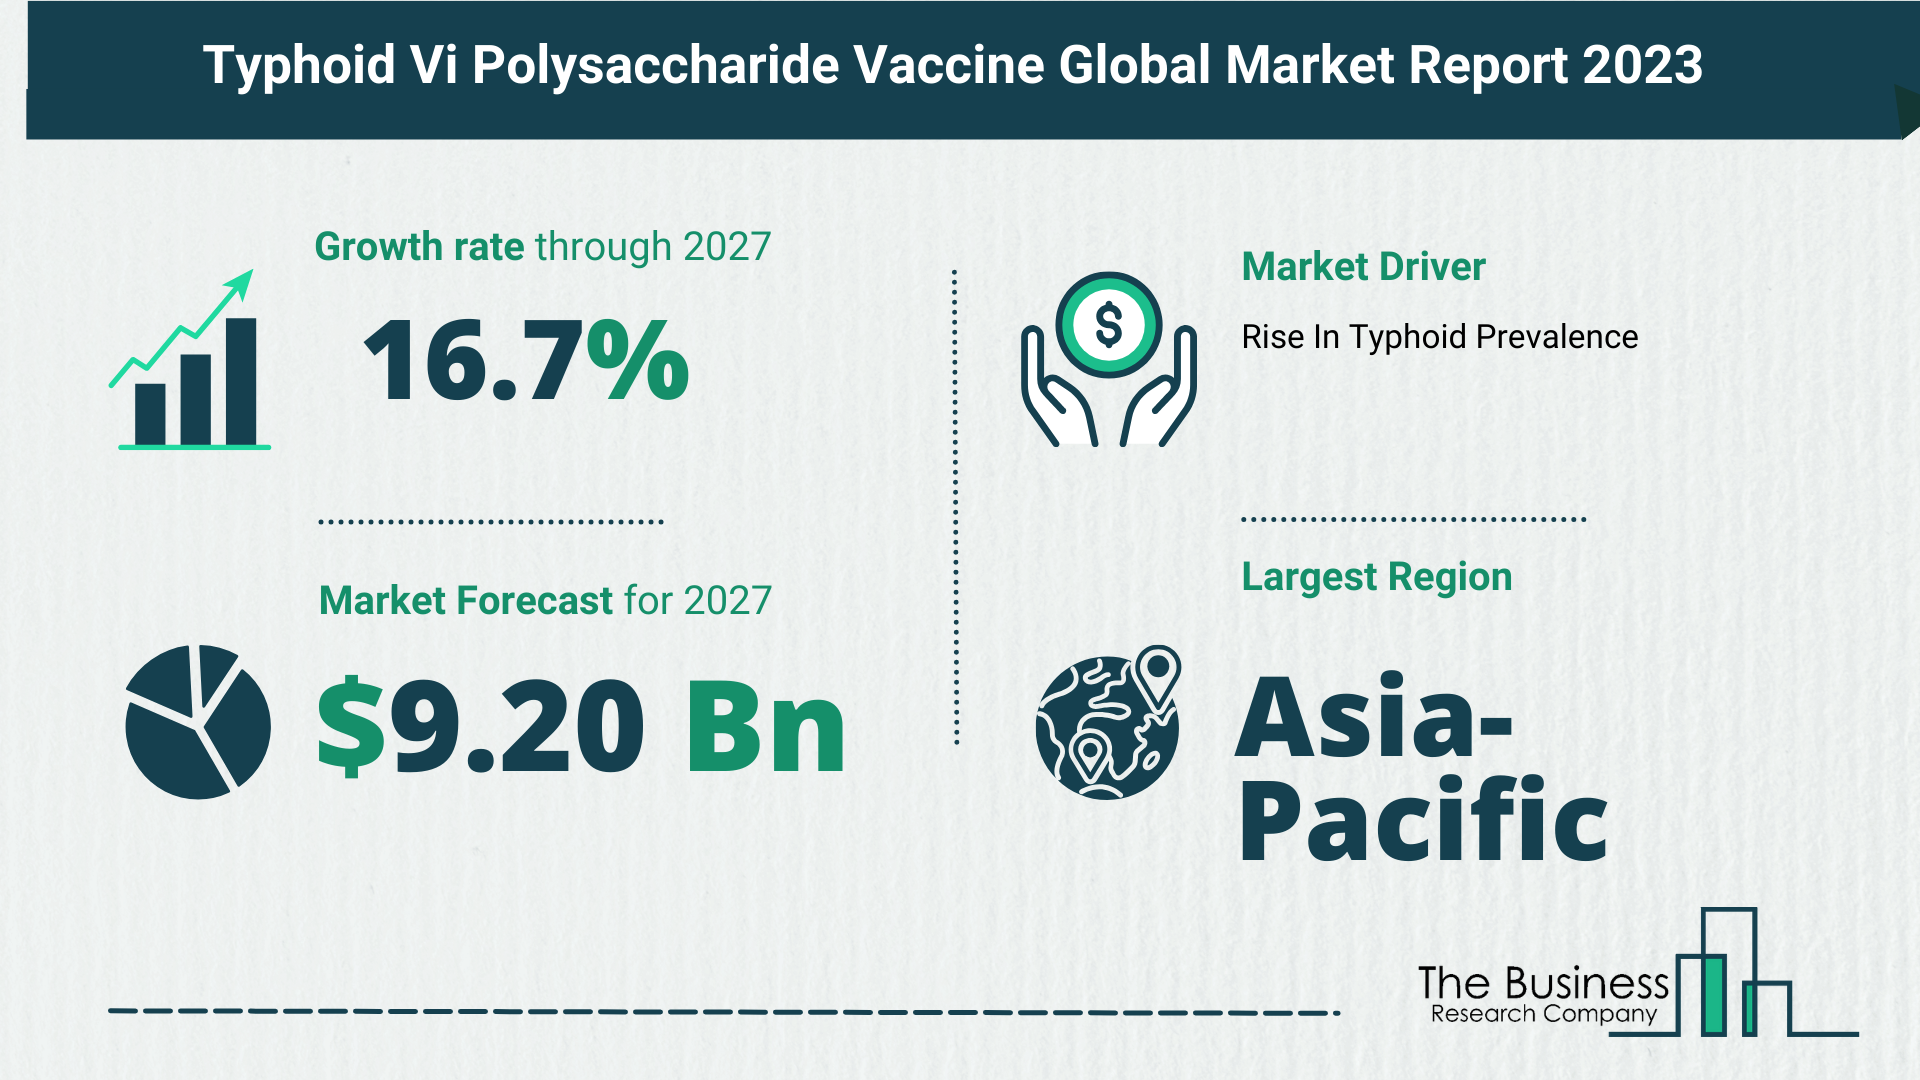 Global Typhoid Vi Polysaccharide Vaccine Market,